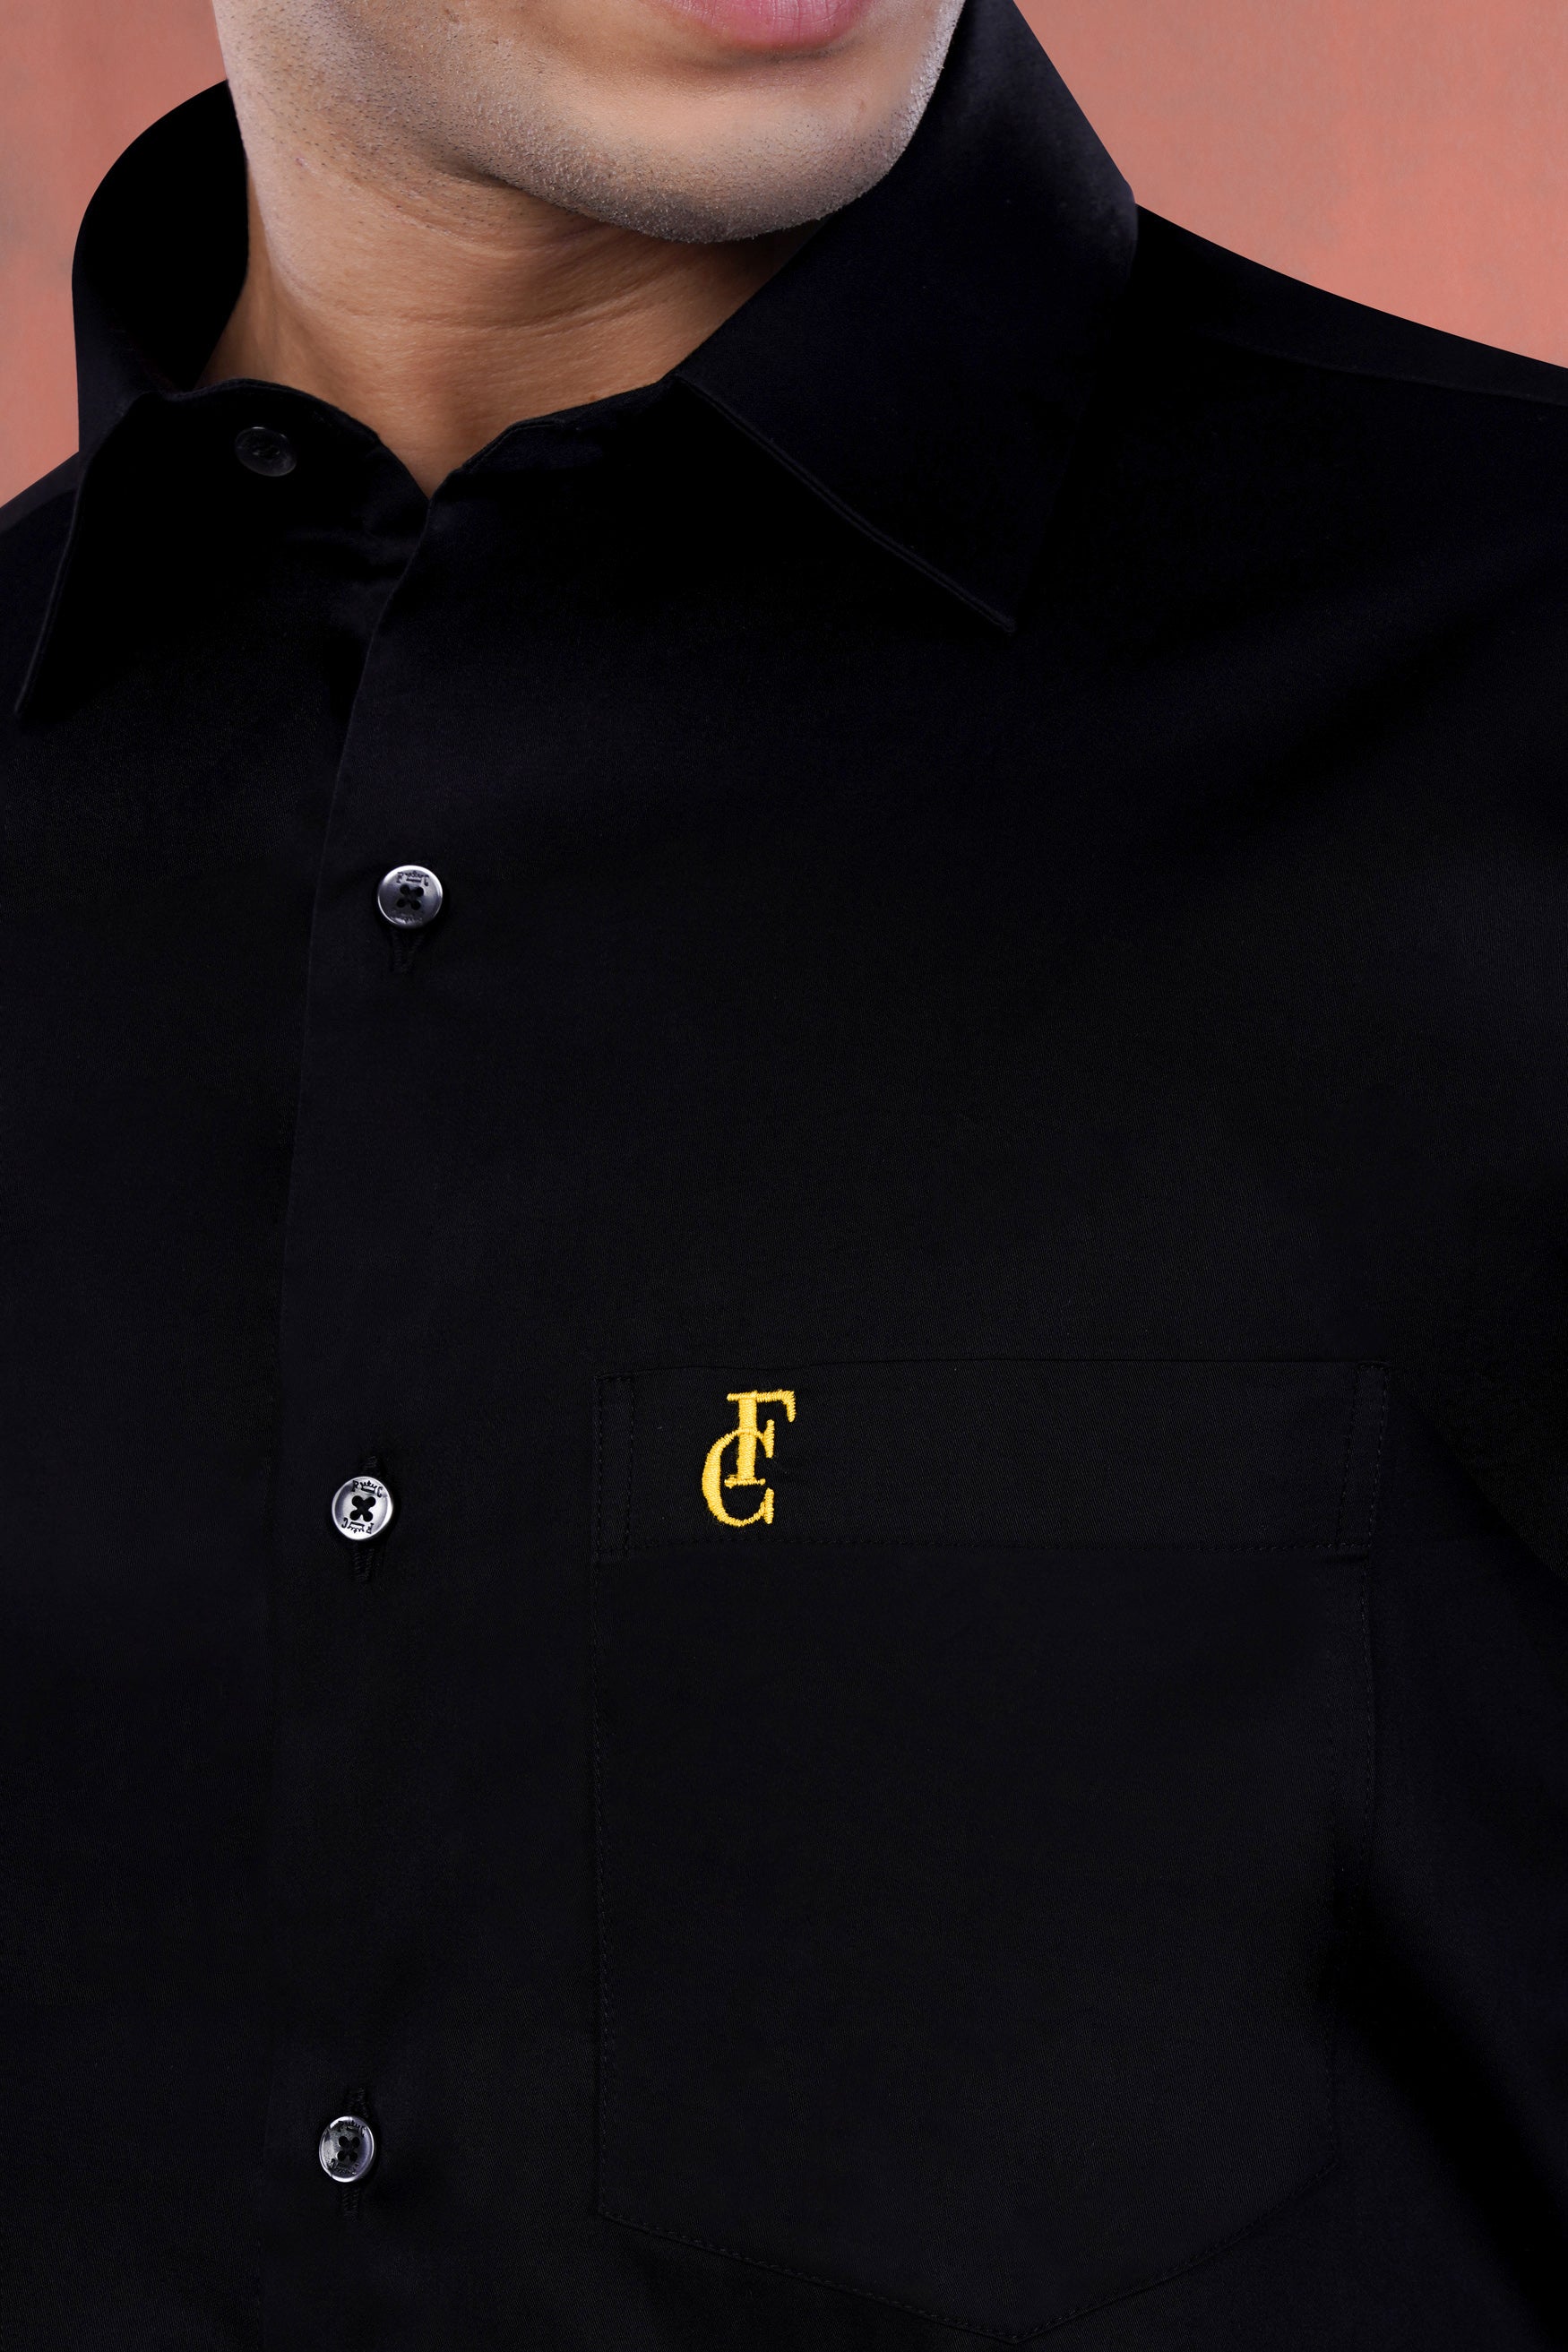 Jade Black French Crown Acronym Embroidered Subtle Sheen Super Soft Premium Cotton Designer Shirt